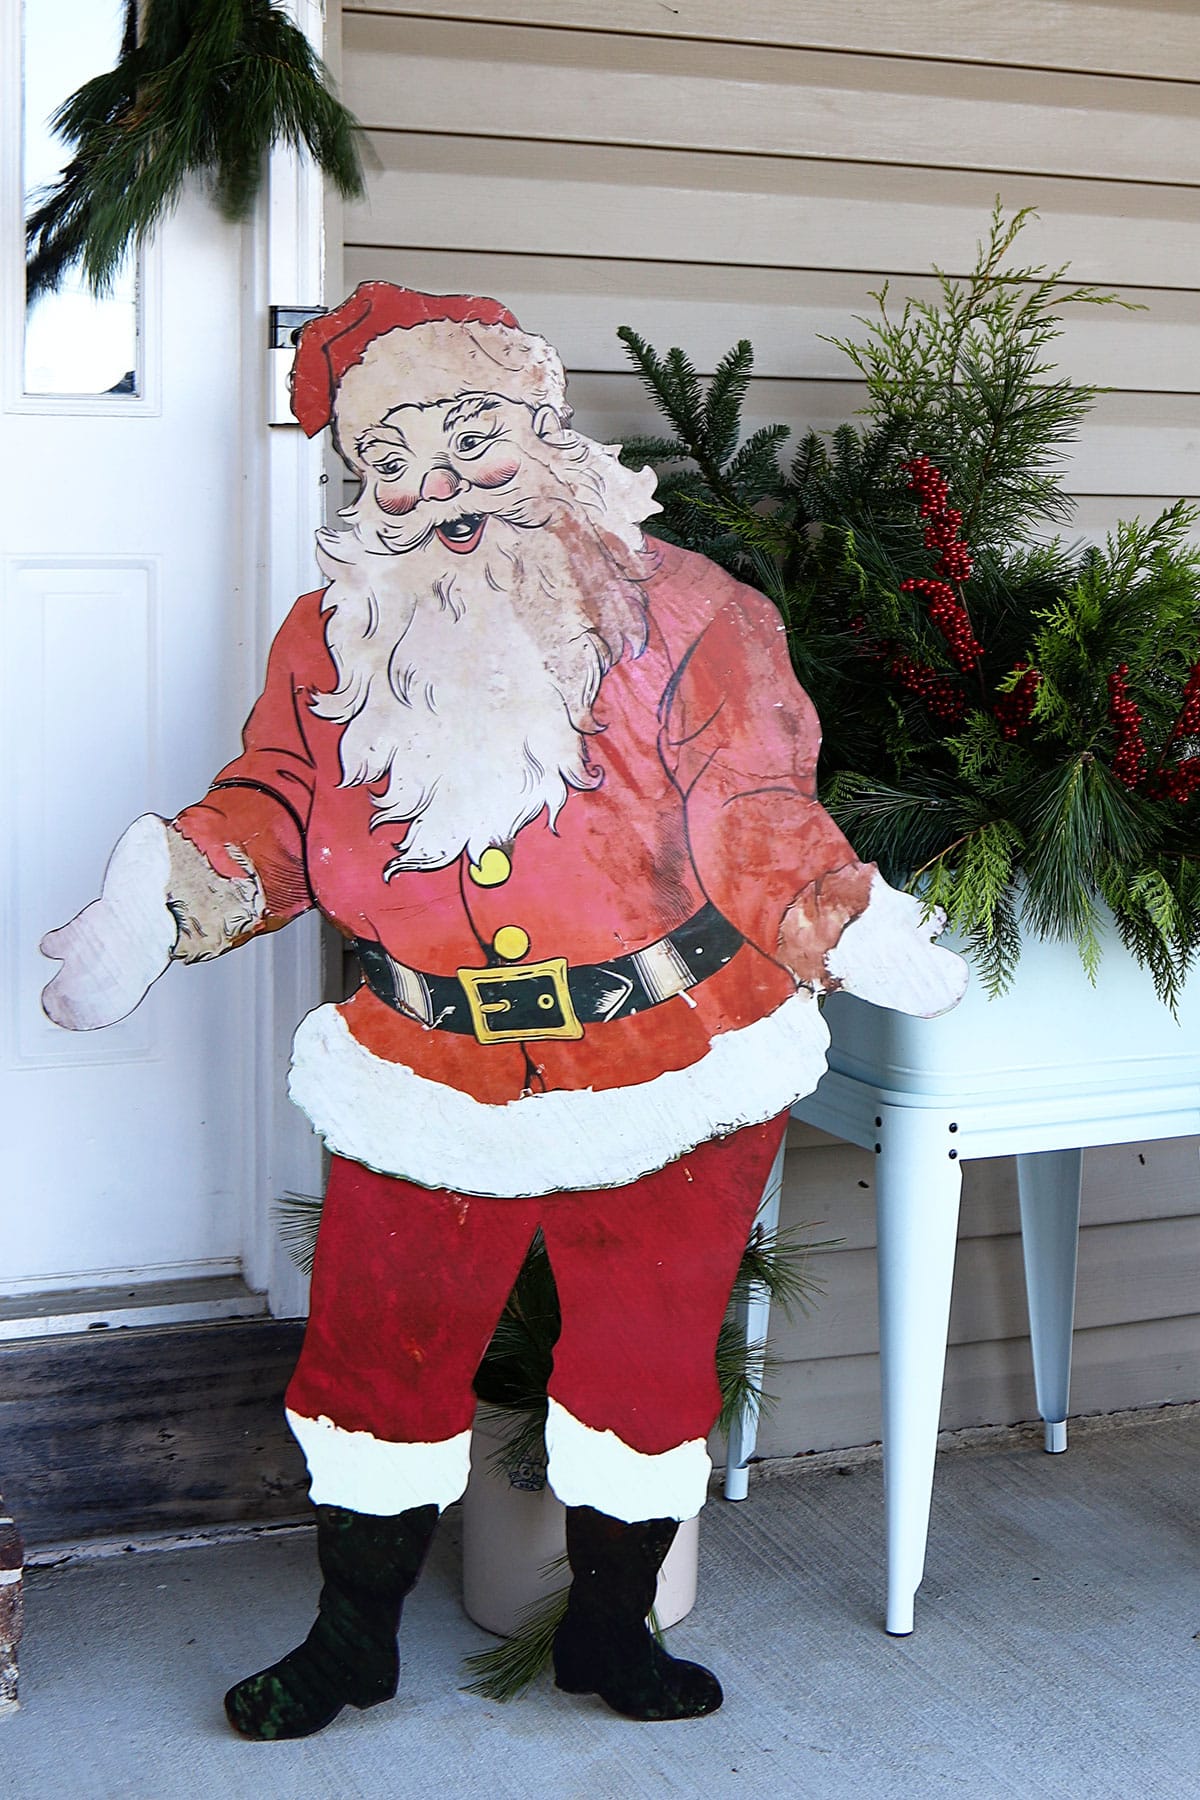 Vintage style wooden Santa porch leaner.